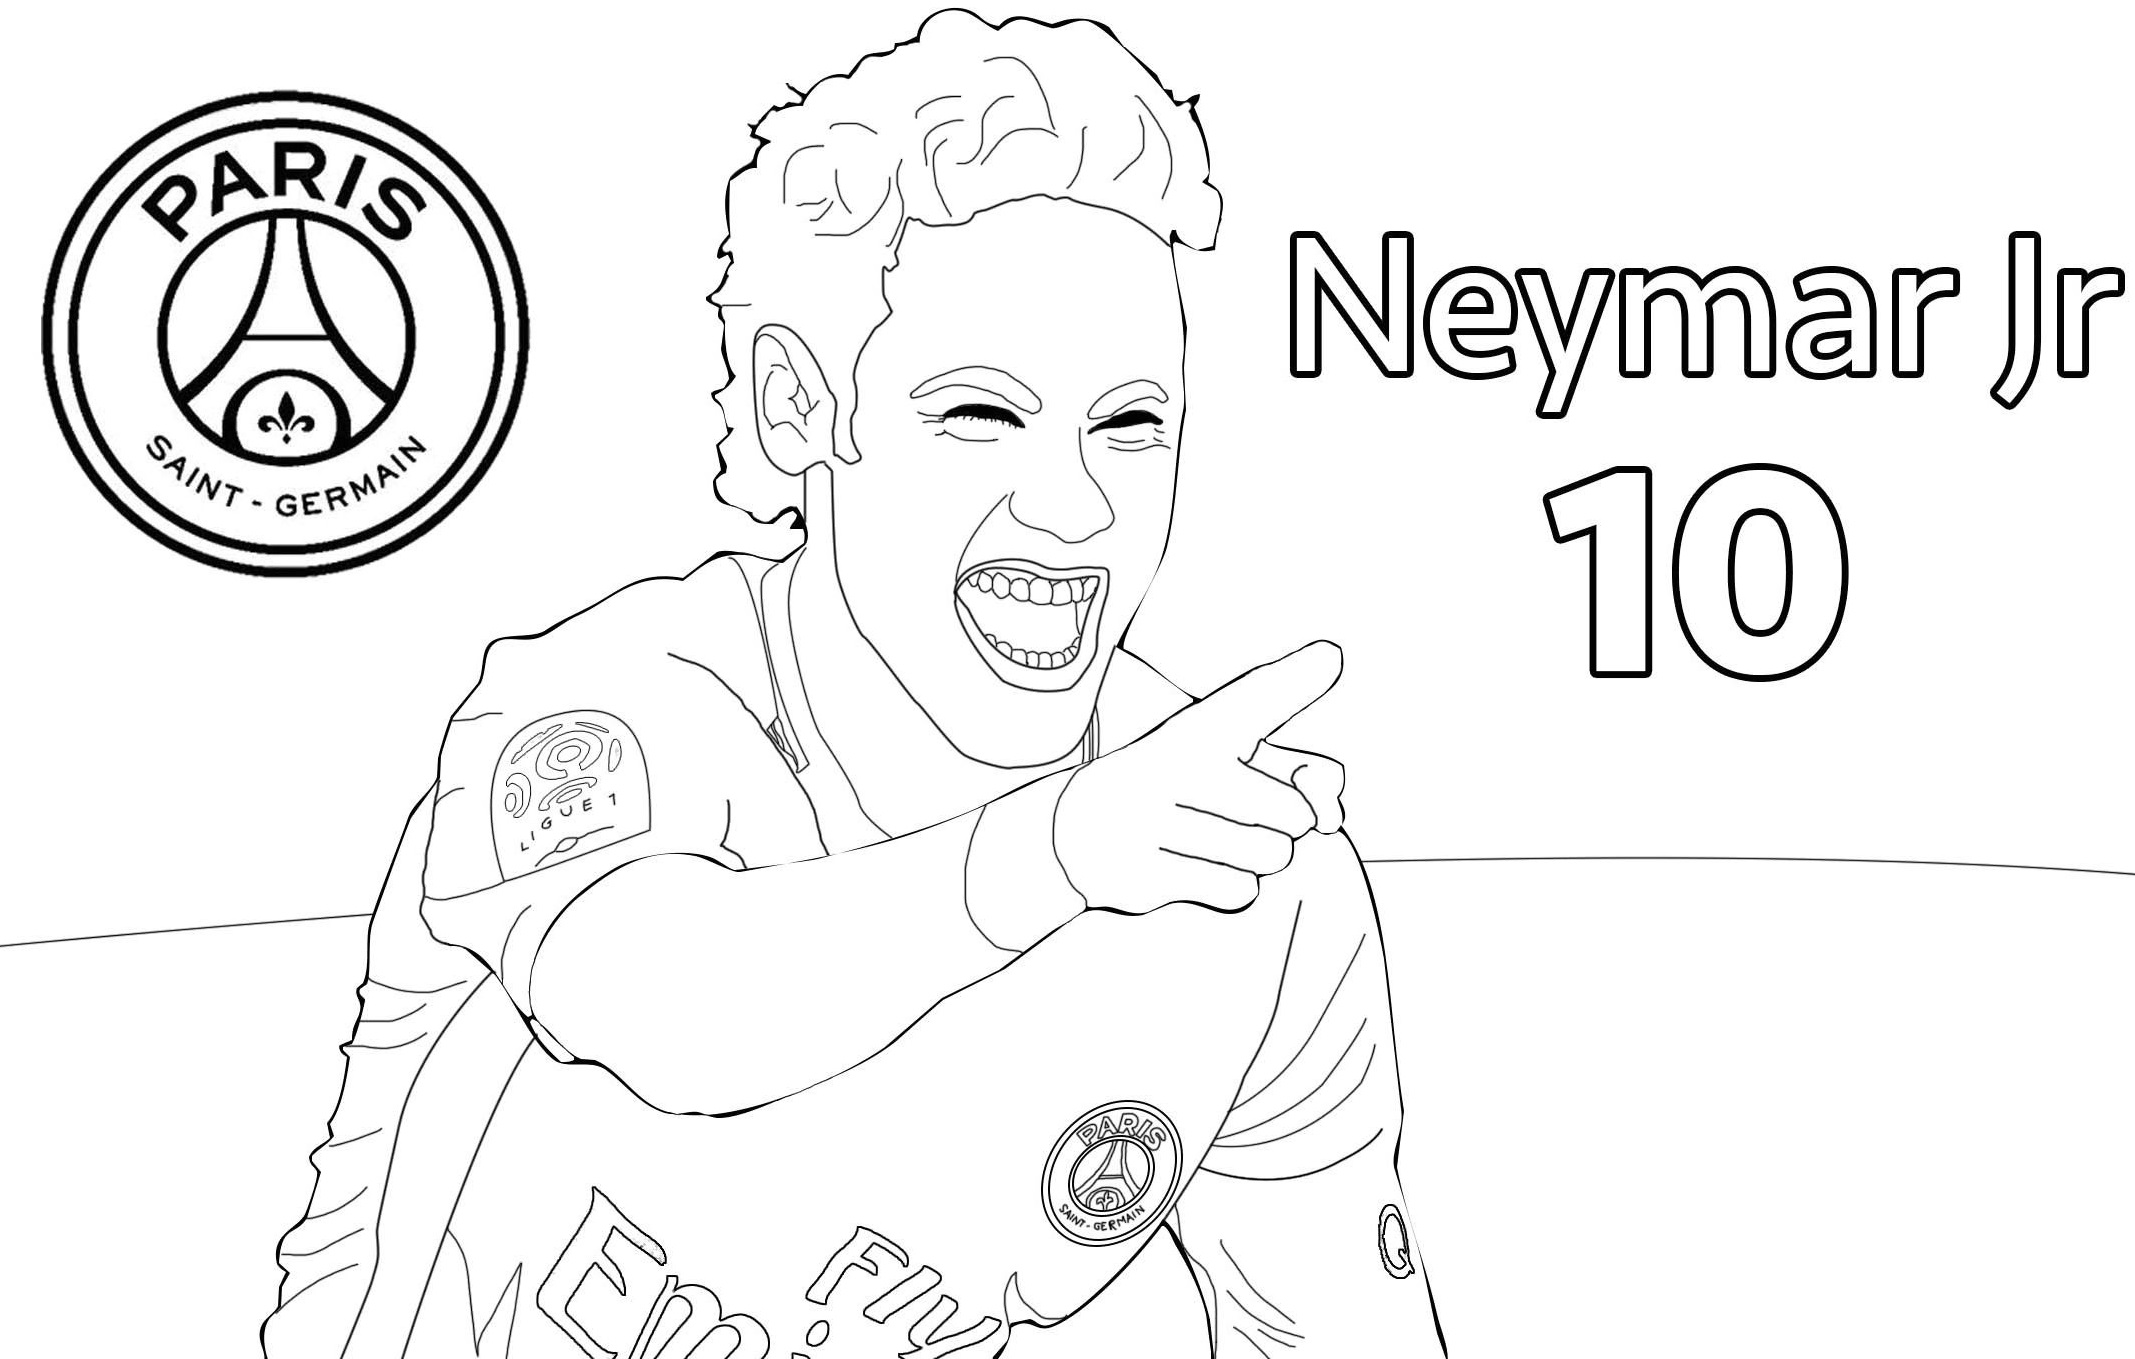   Neymar Jr 10, talent inégalé 